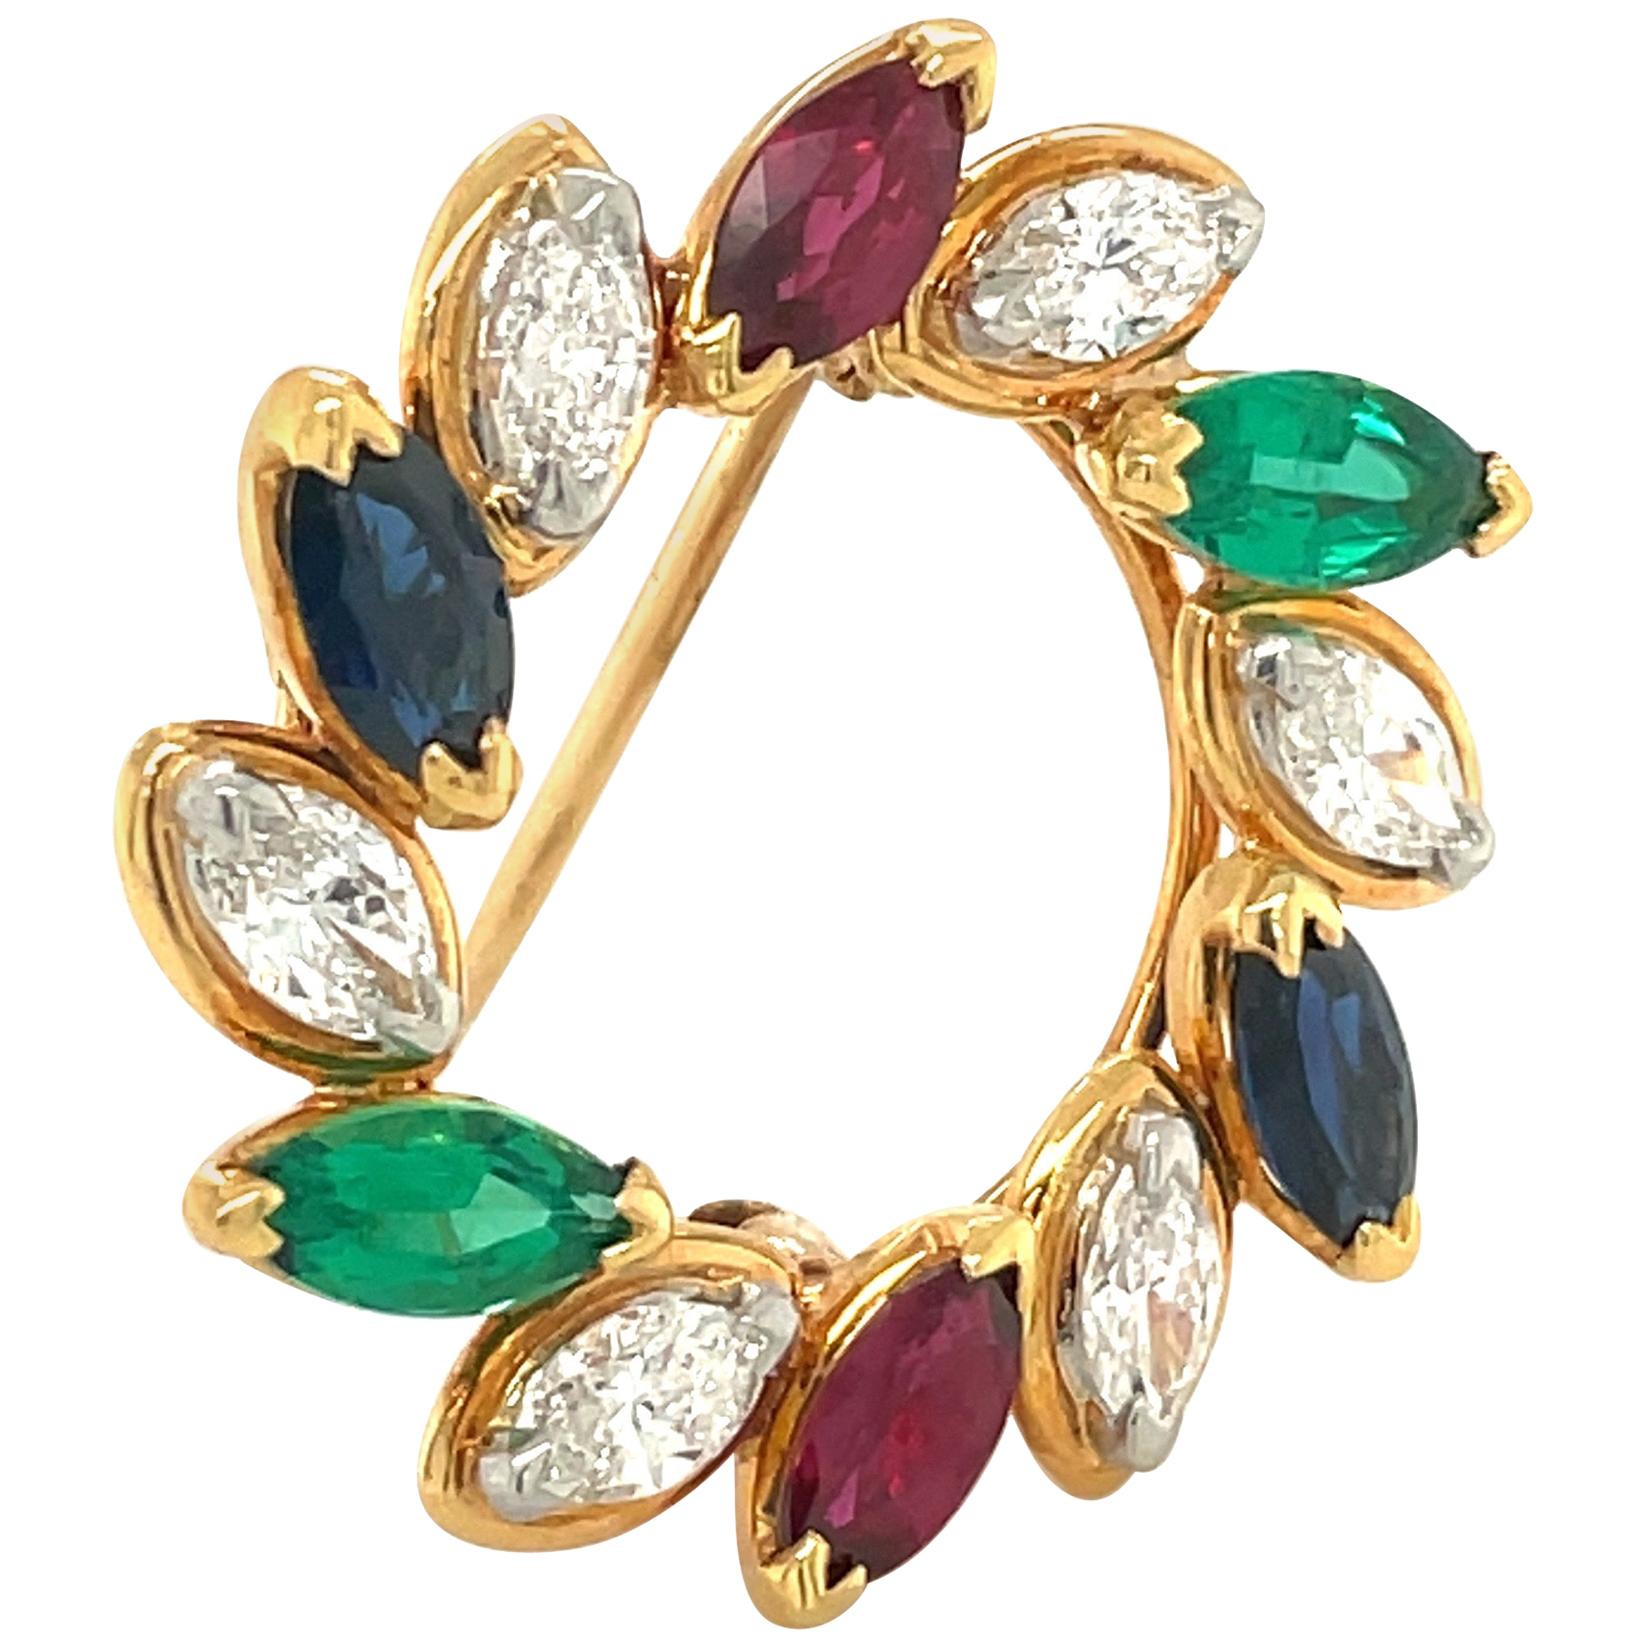 Oscar Heyman 18 Karat Gold Wreath Brooch with Marquis Diamonds and Gem Stones